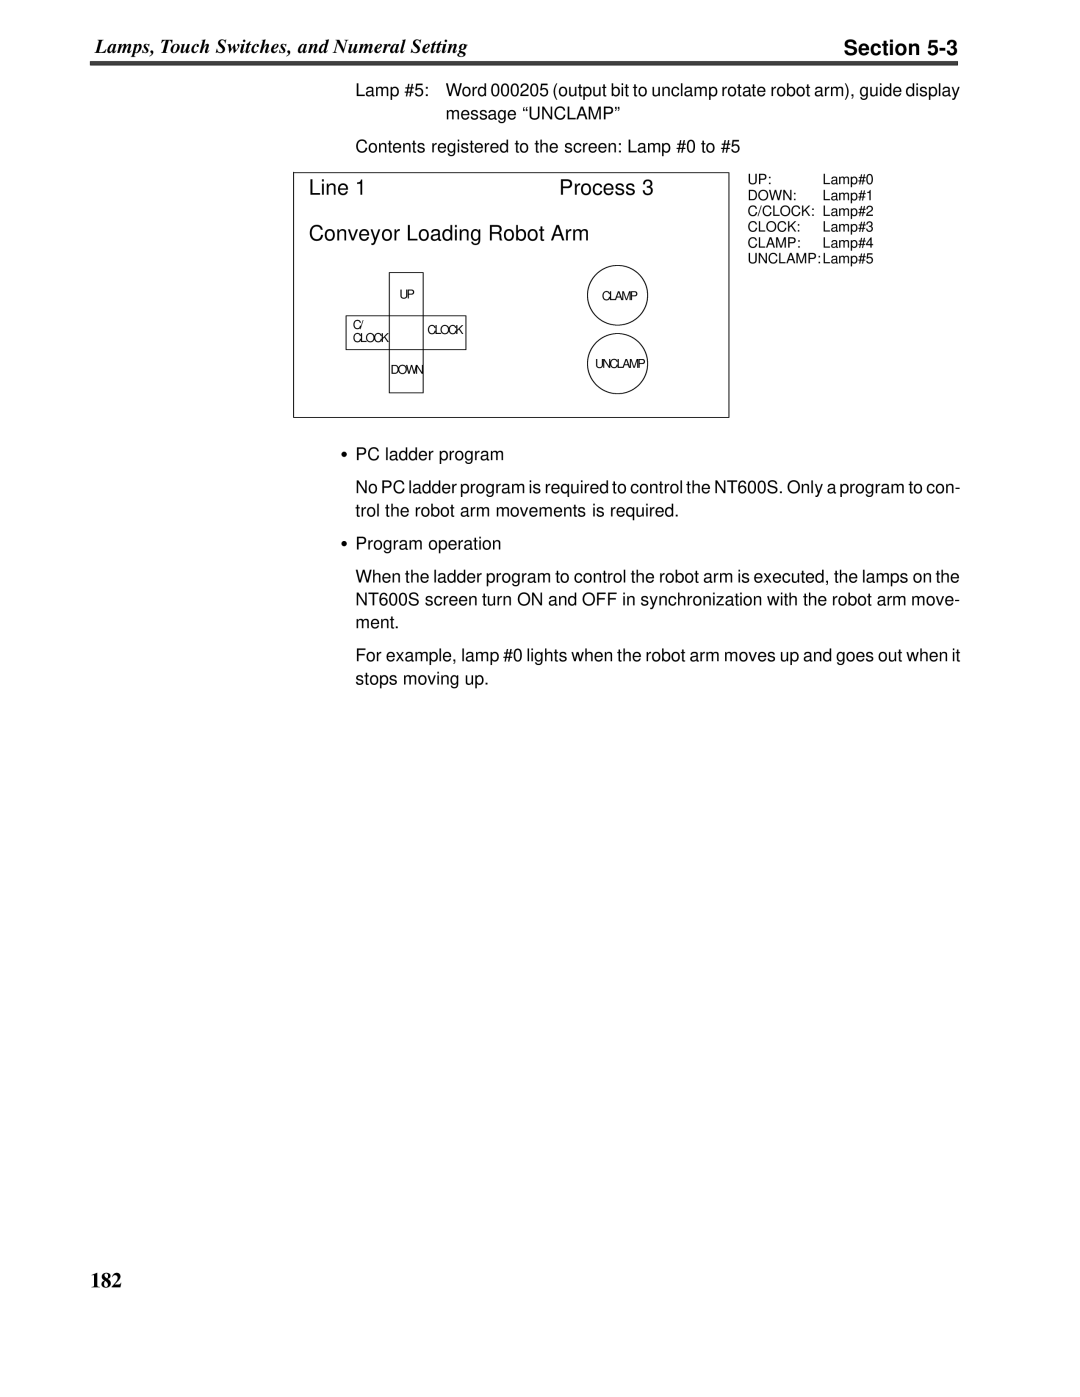 Omron V022-E3-1 operation manual Section, Line, Process, Conveyor Loading Robot Arm 